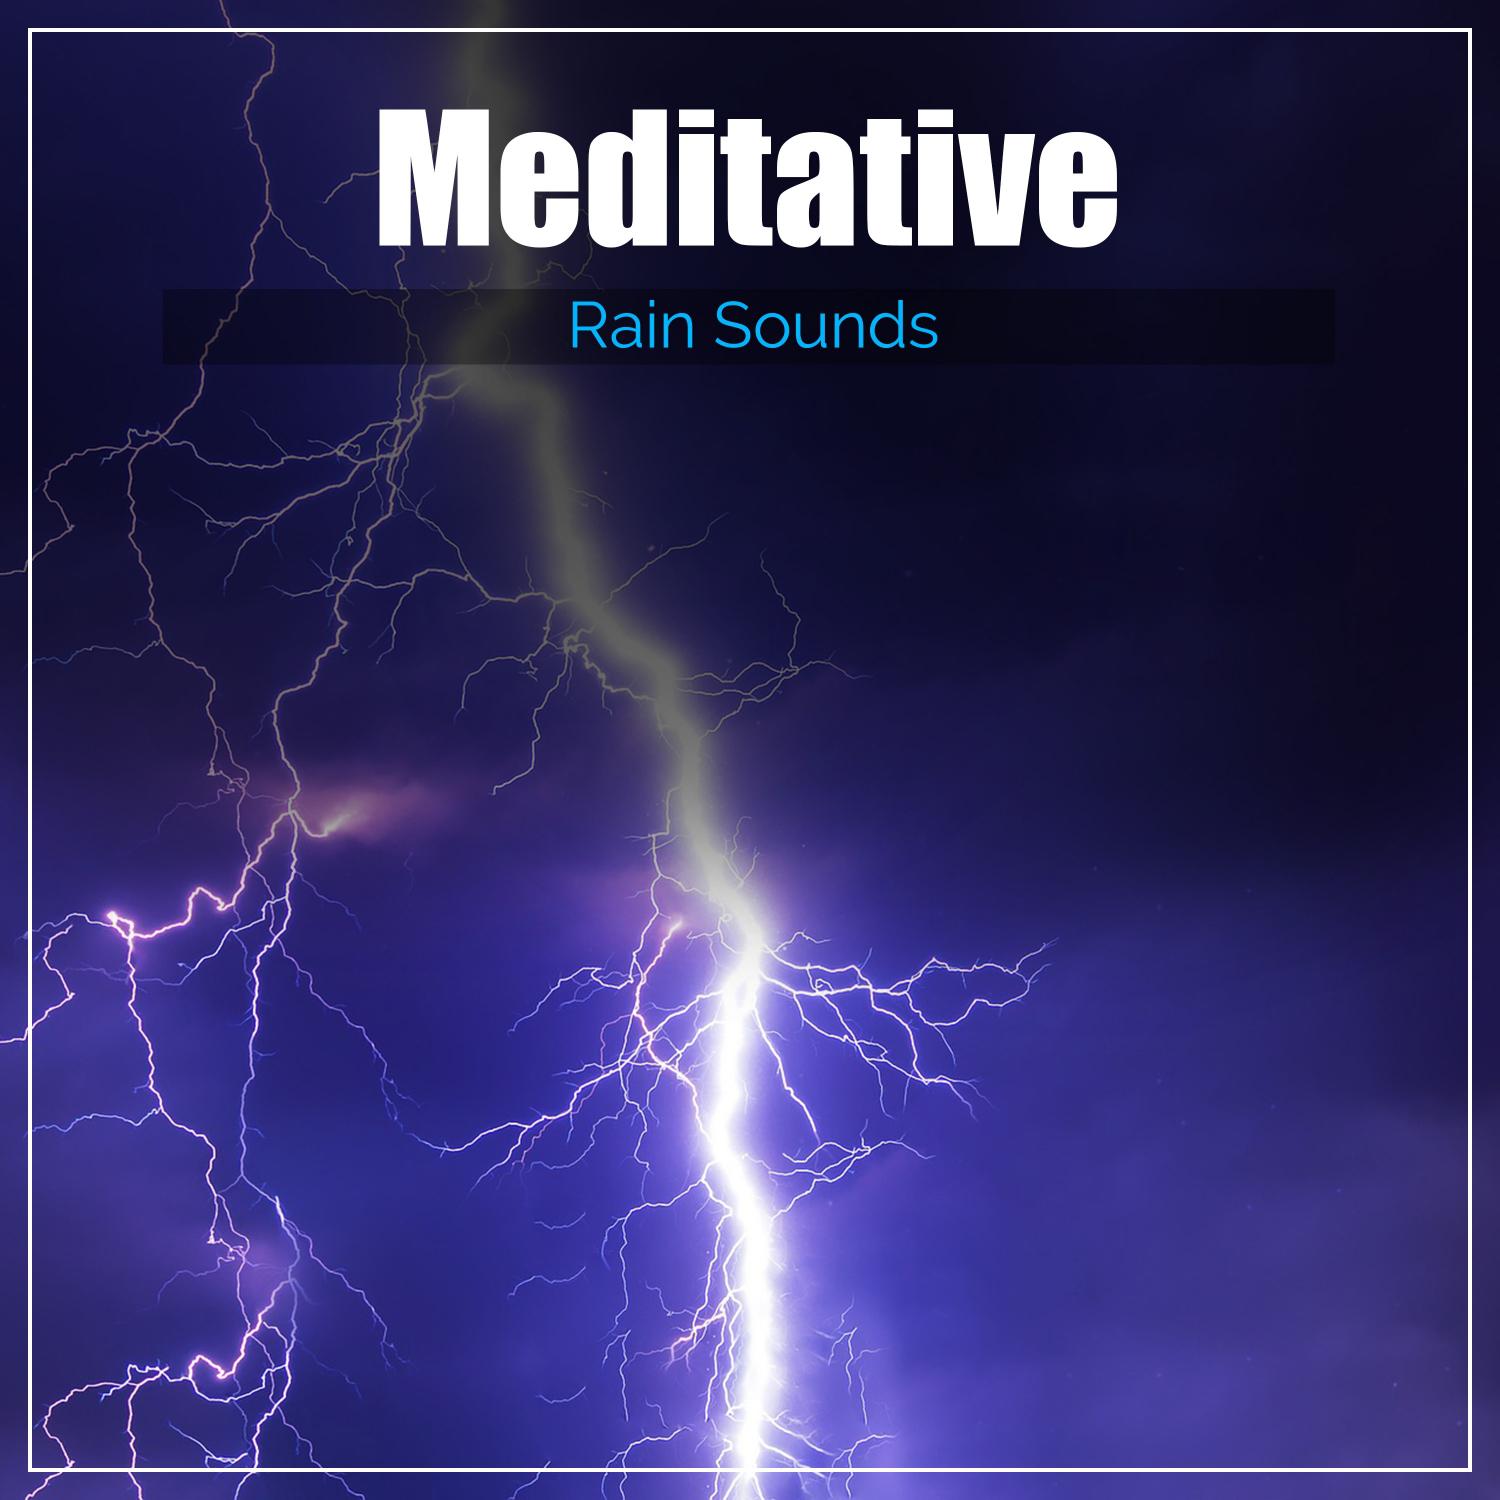 20 Amazing Meditative Rain Sounds - Inner Peace, Zen, Meditation, Yoga or Spa